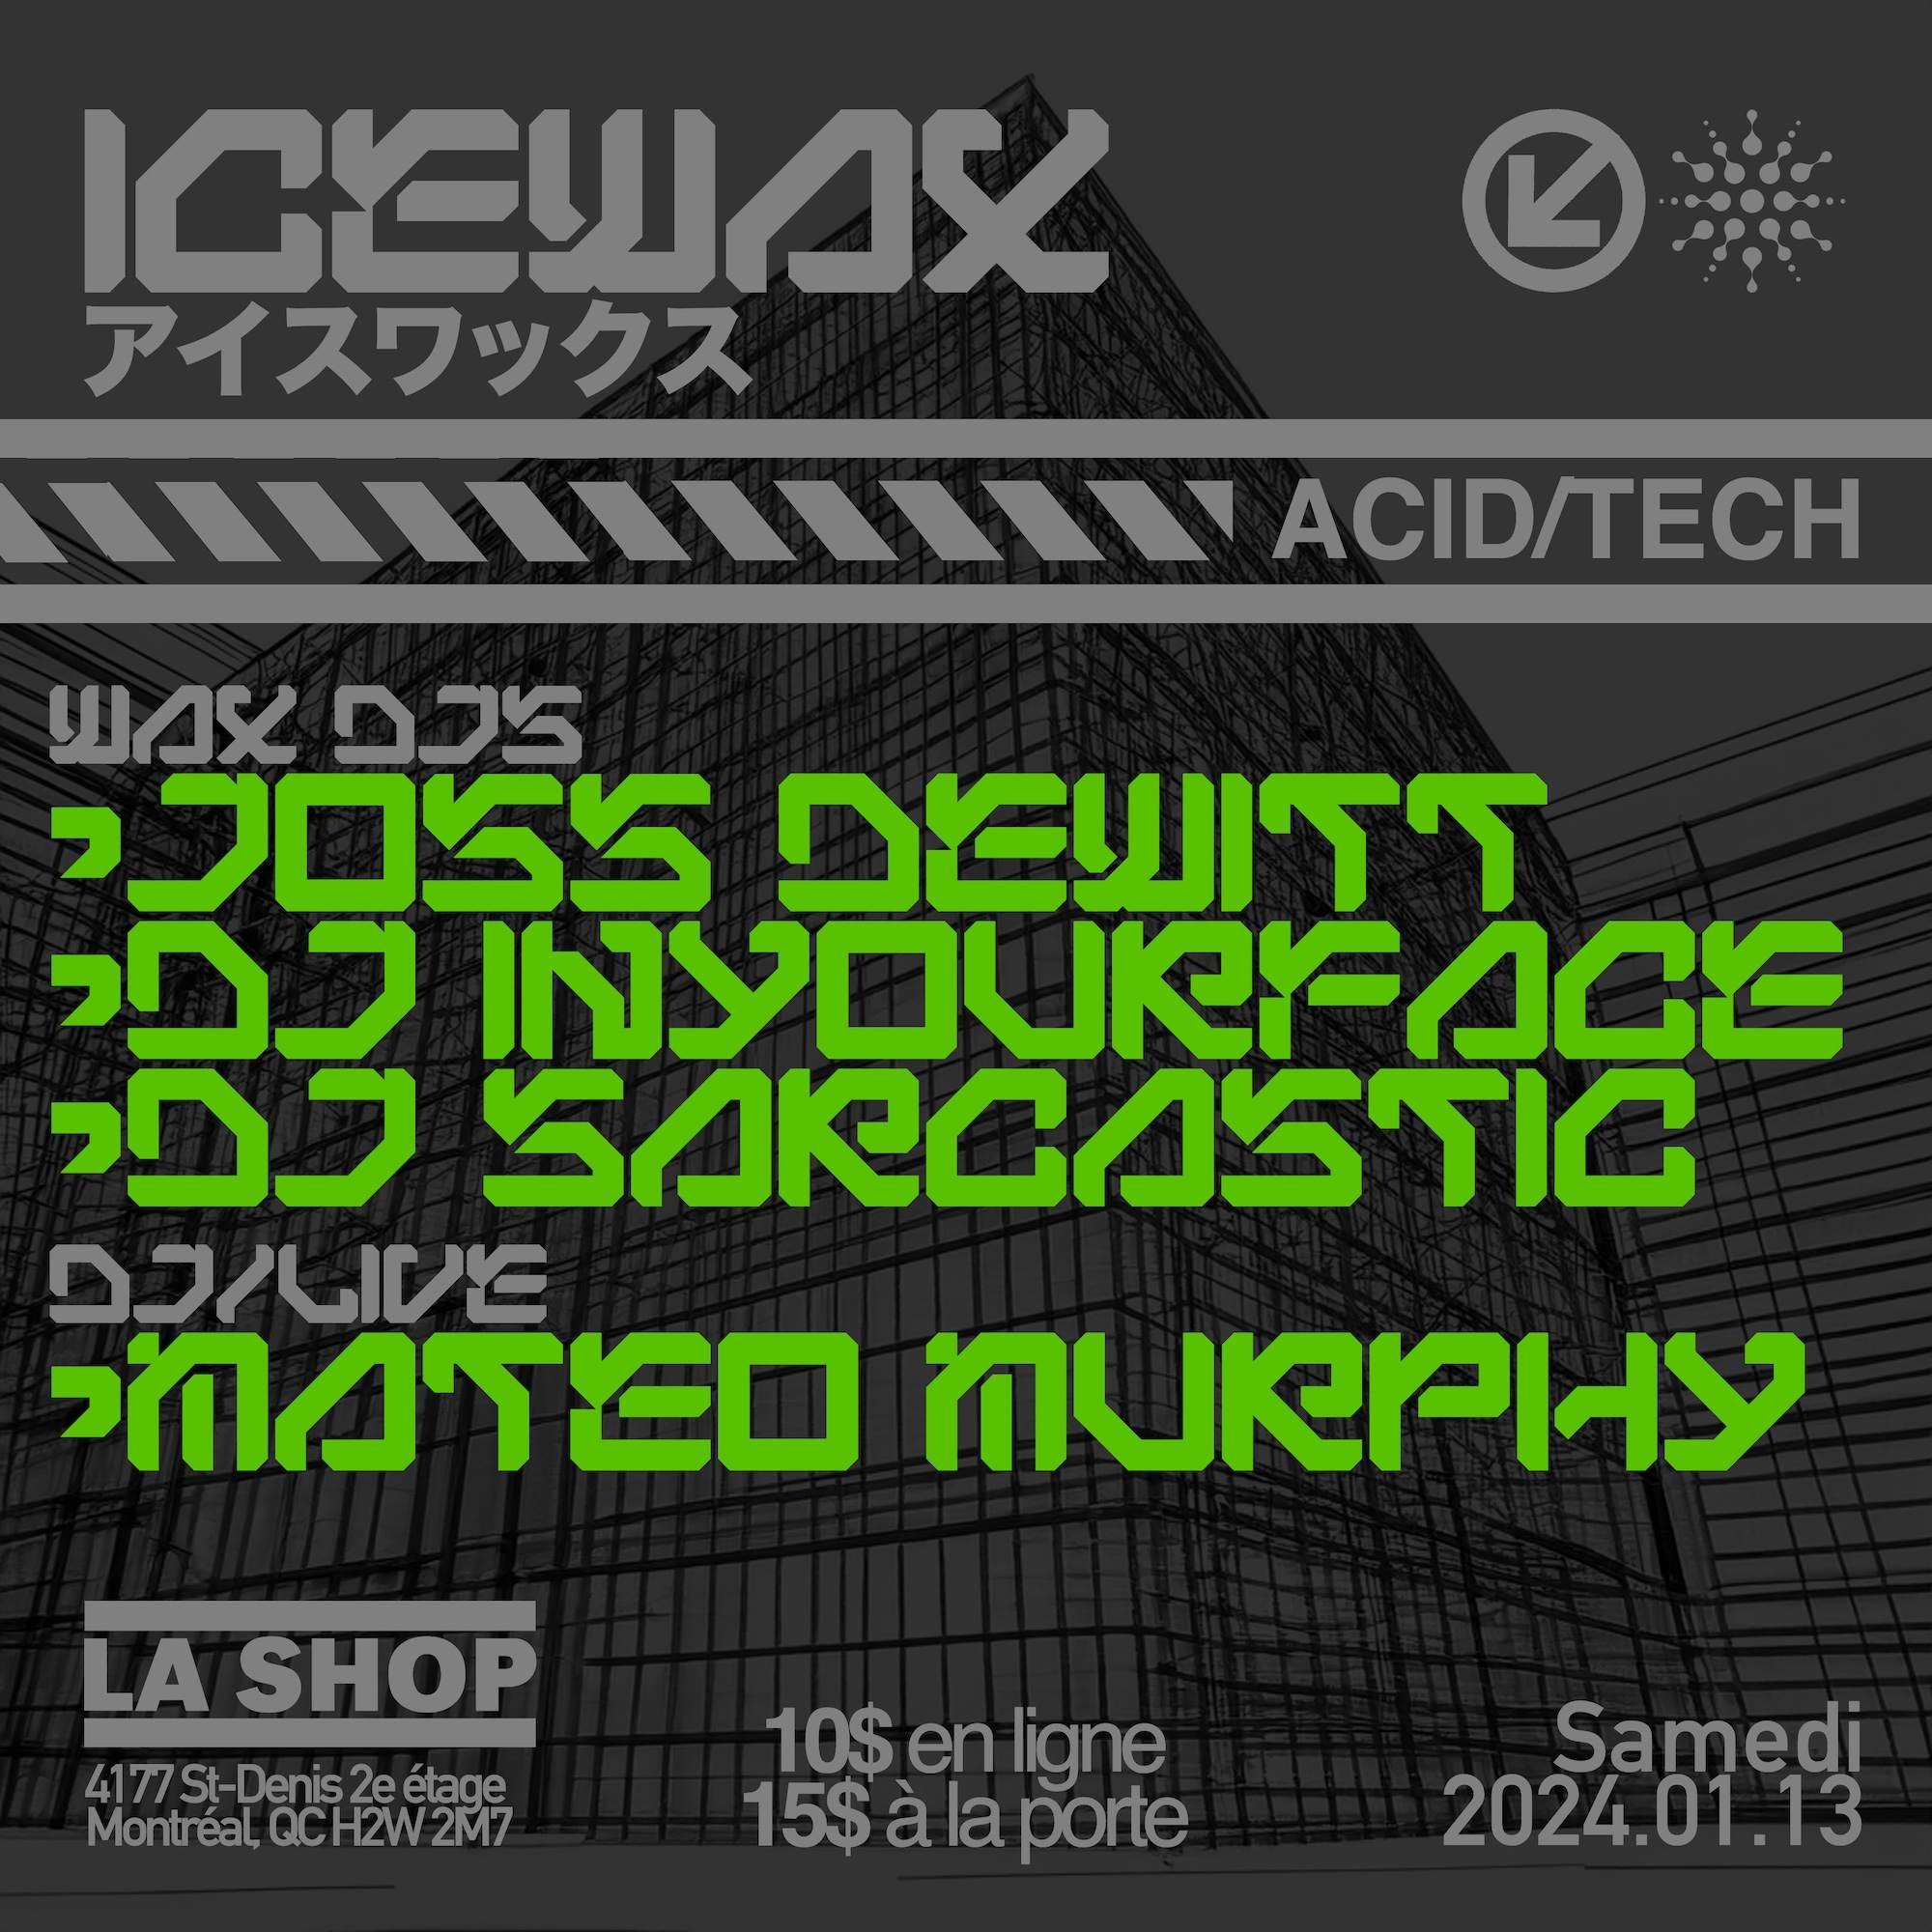 icewax ACID/TECH at La Shop - フライヤー表